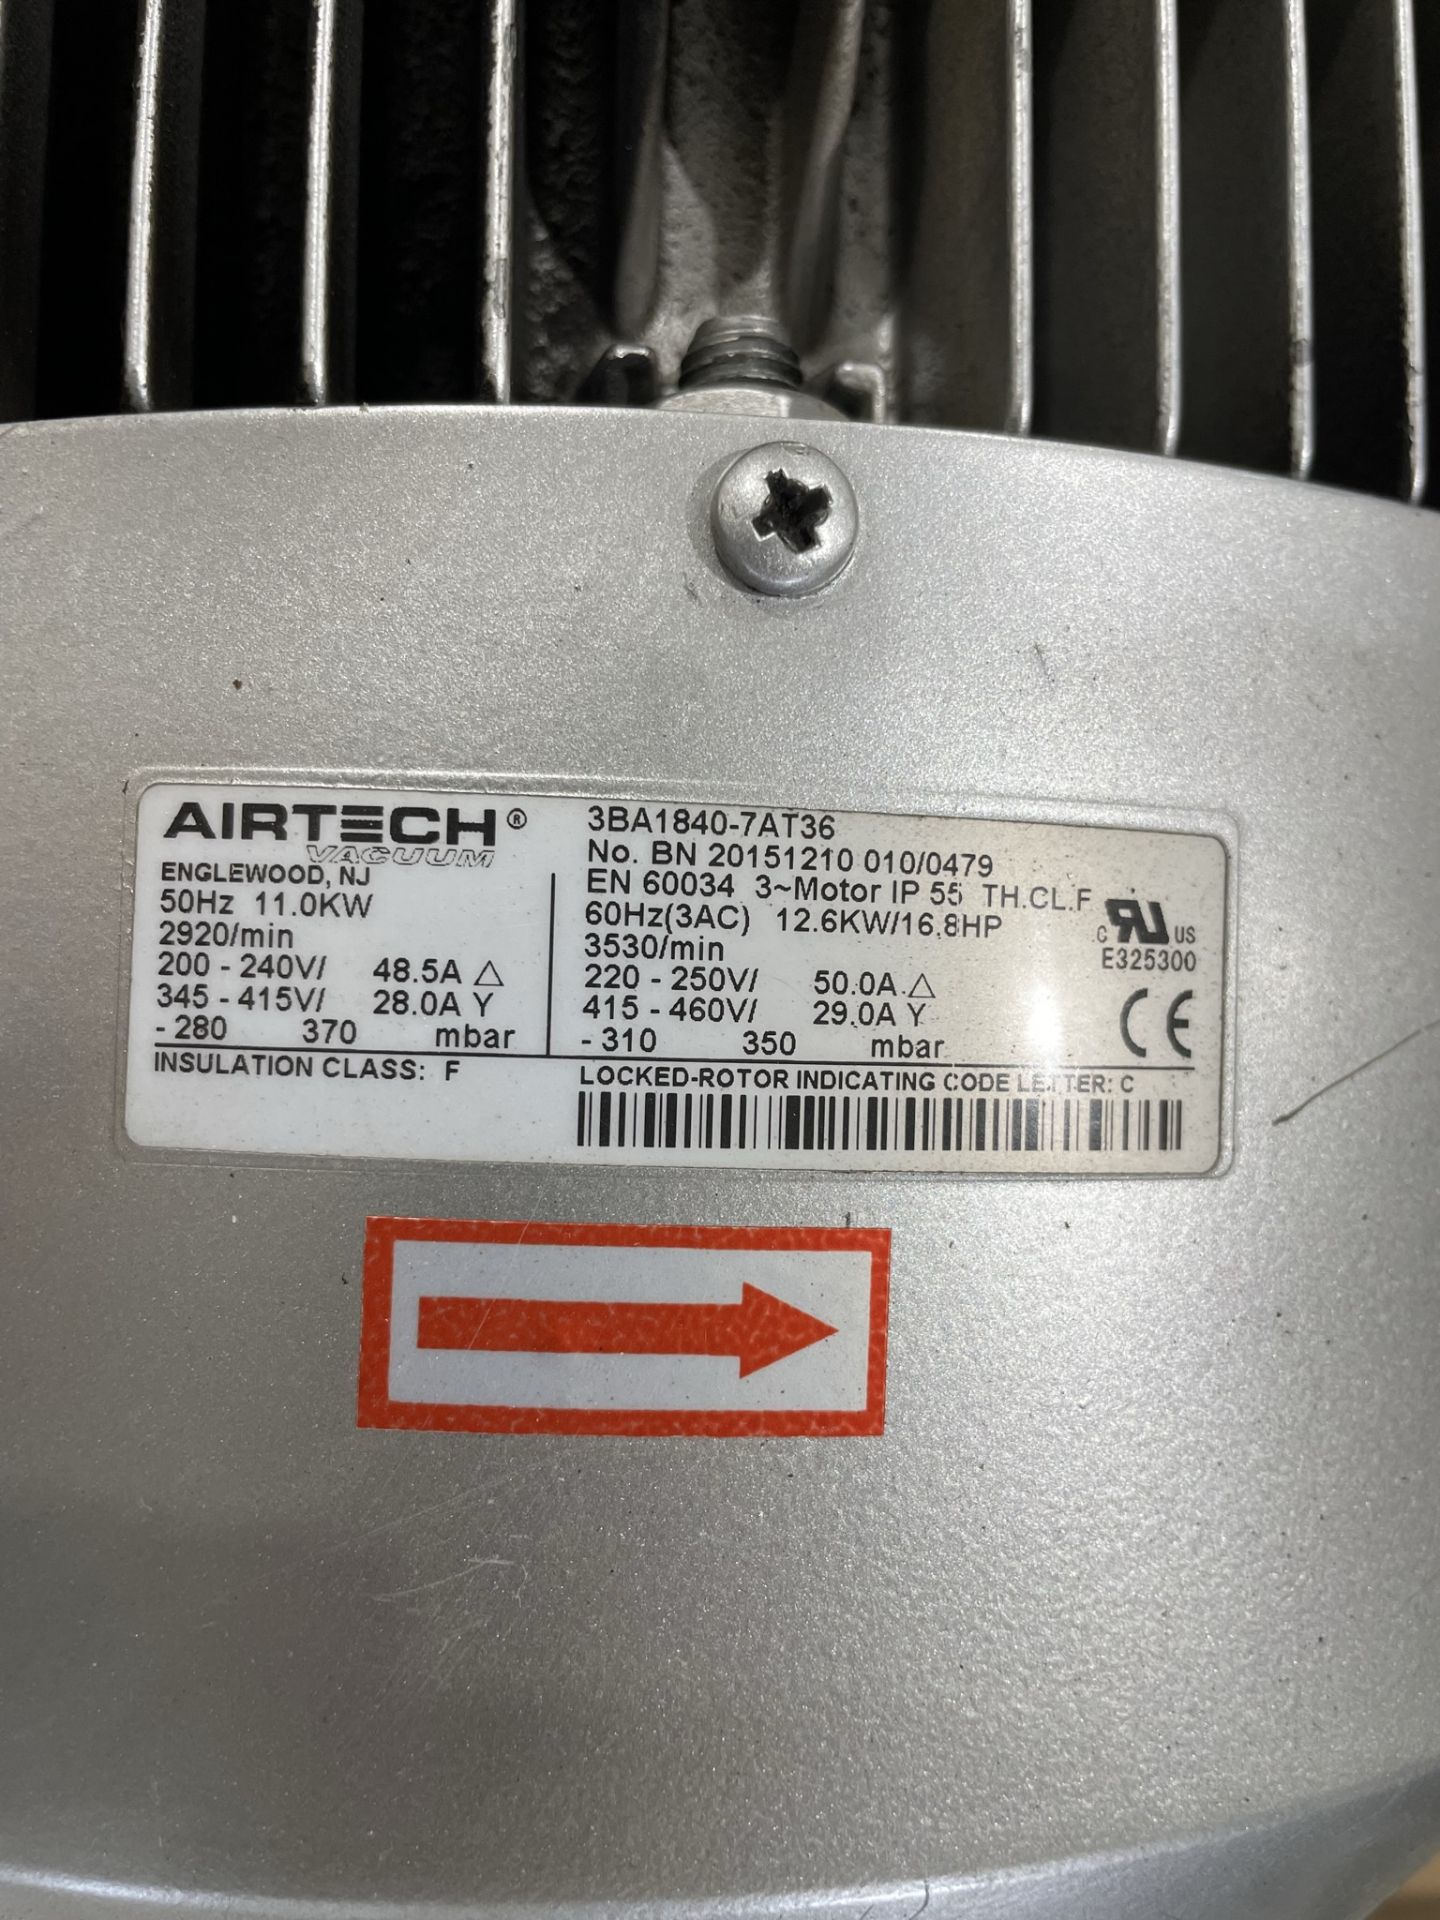 (3) Airtech model 3BA1840-7AT36 Vacuum/Pressure Regenerative Blowers with 16.8 HP, 220/460 volt - Image 4 of 5